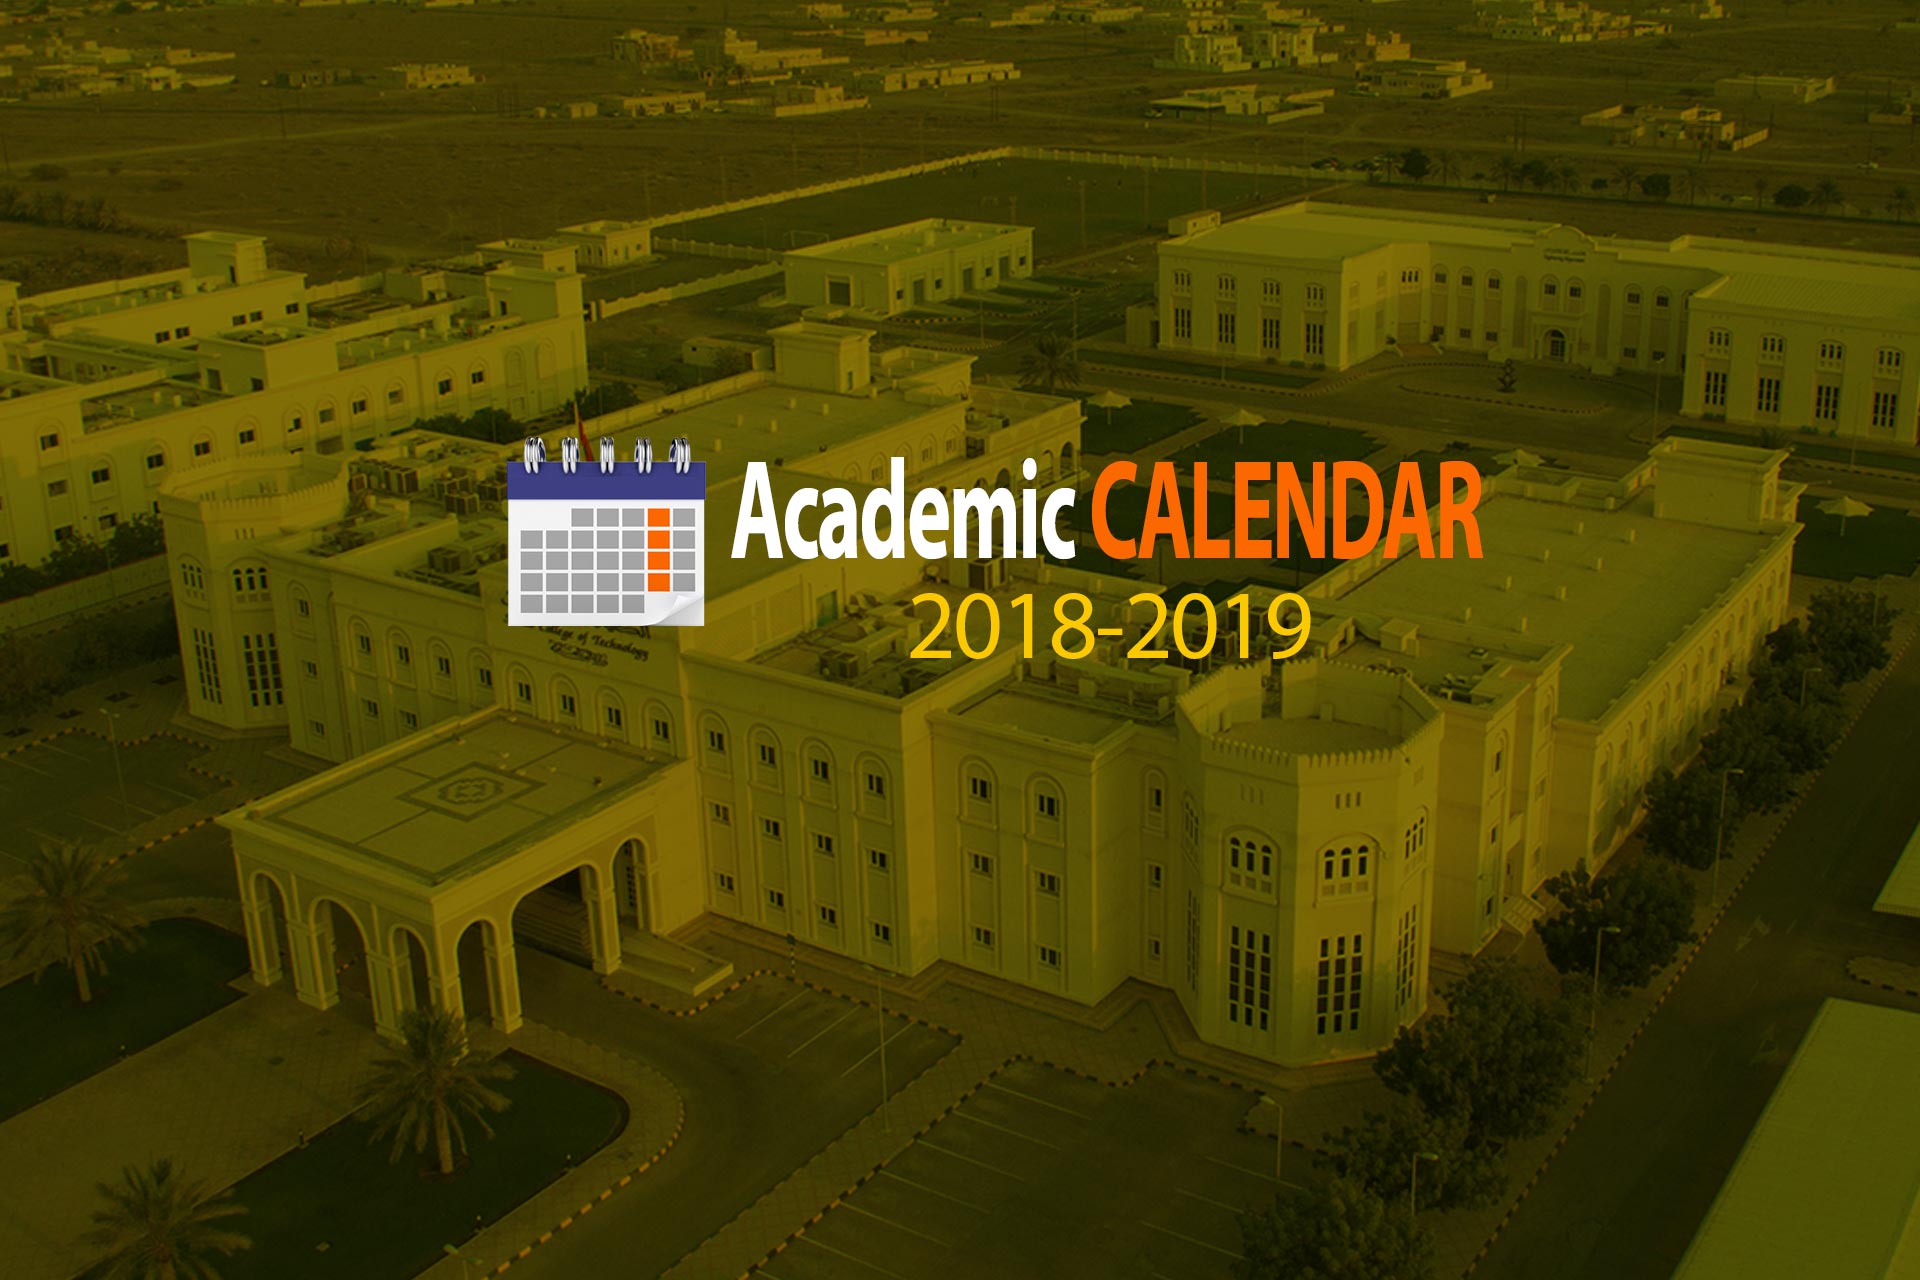 Academic Calendar 2018-2019 | University of Technology and ...